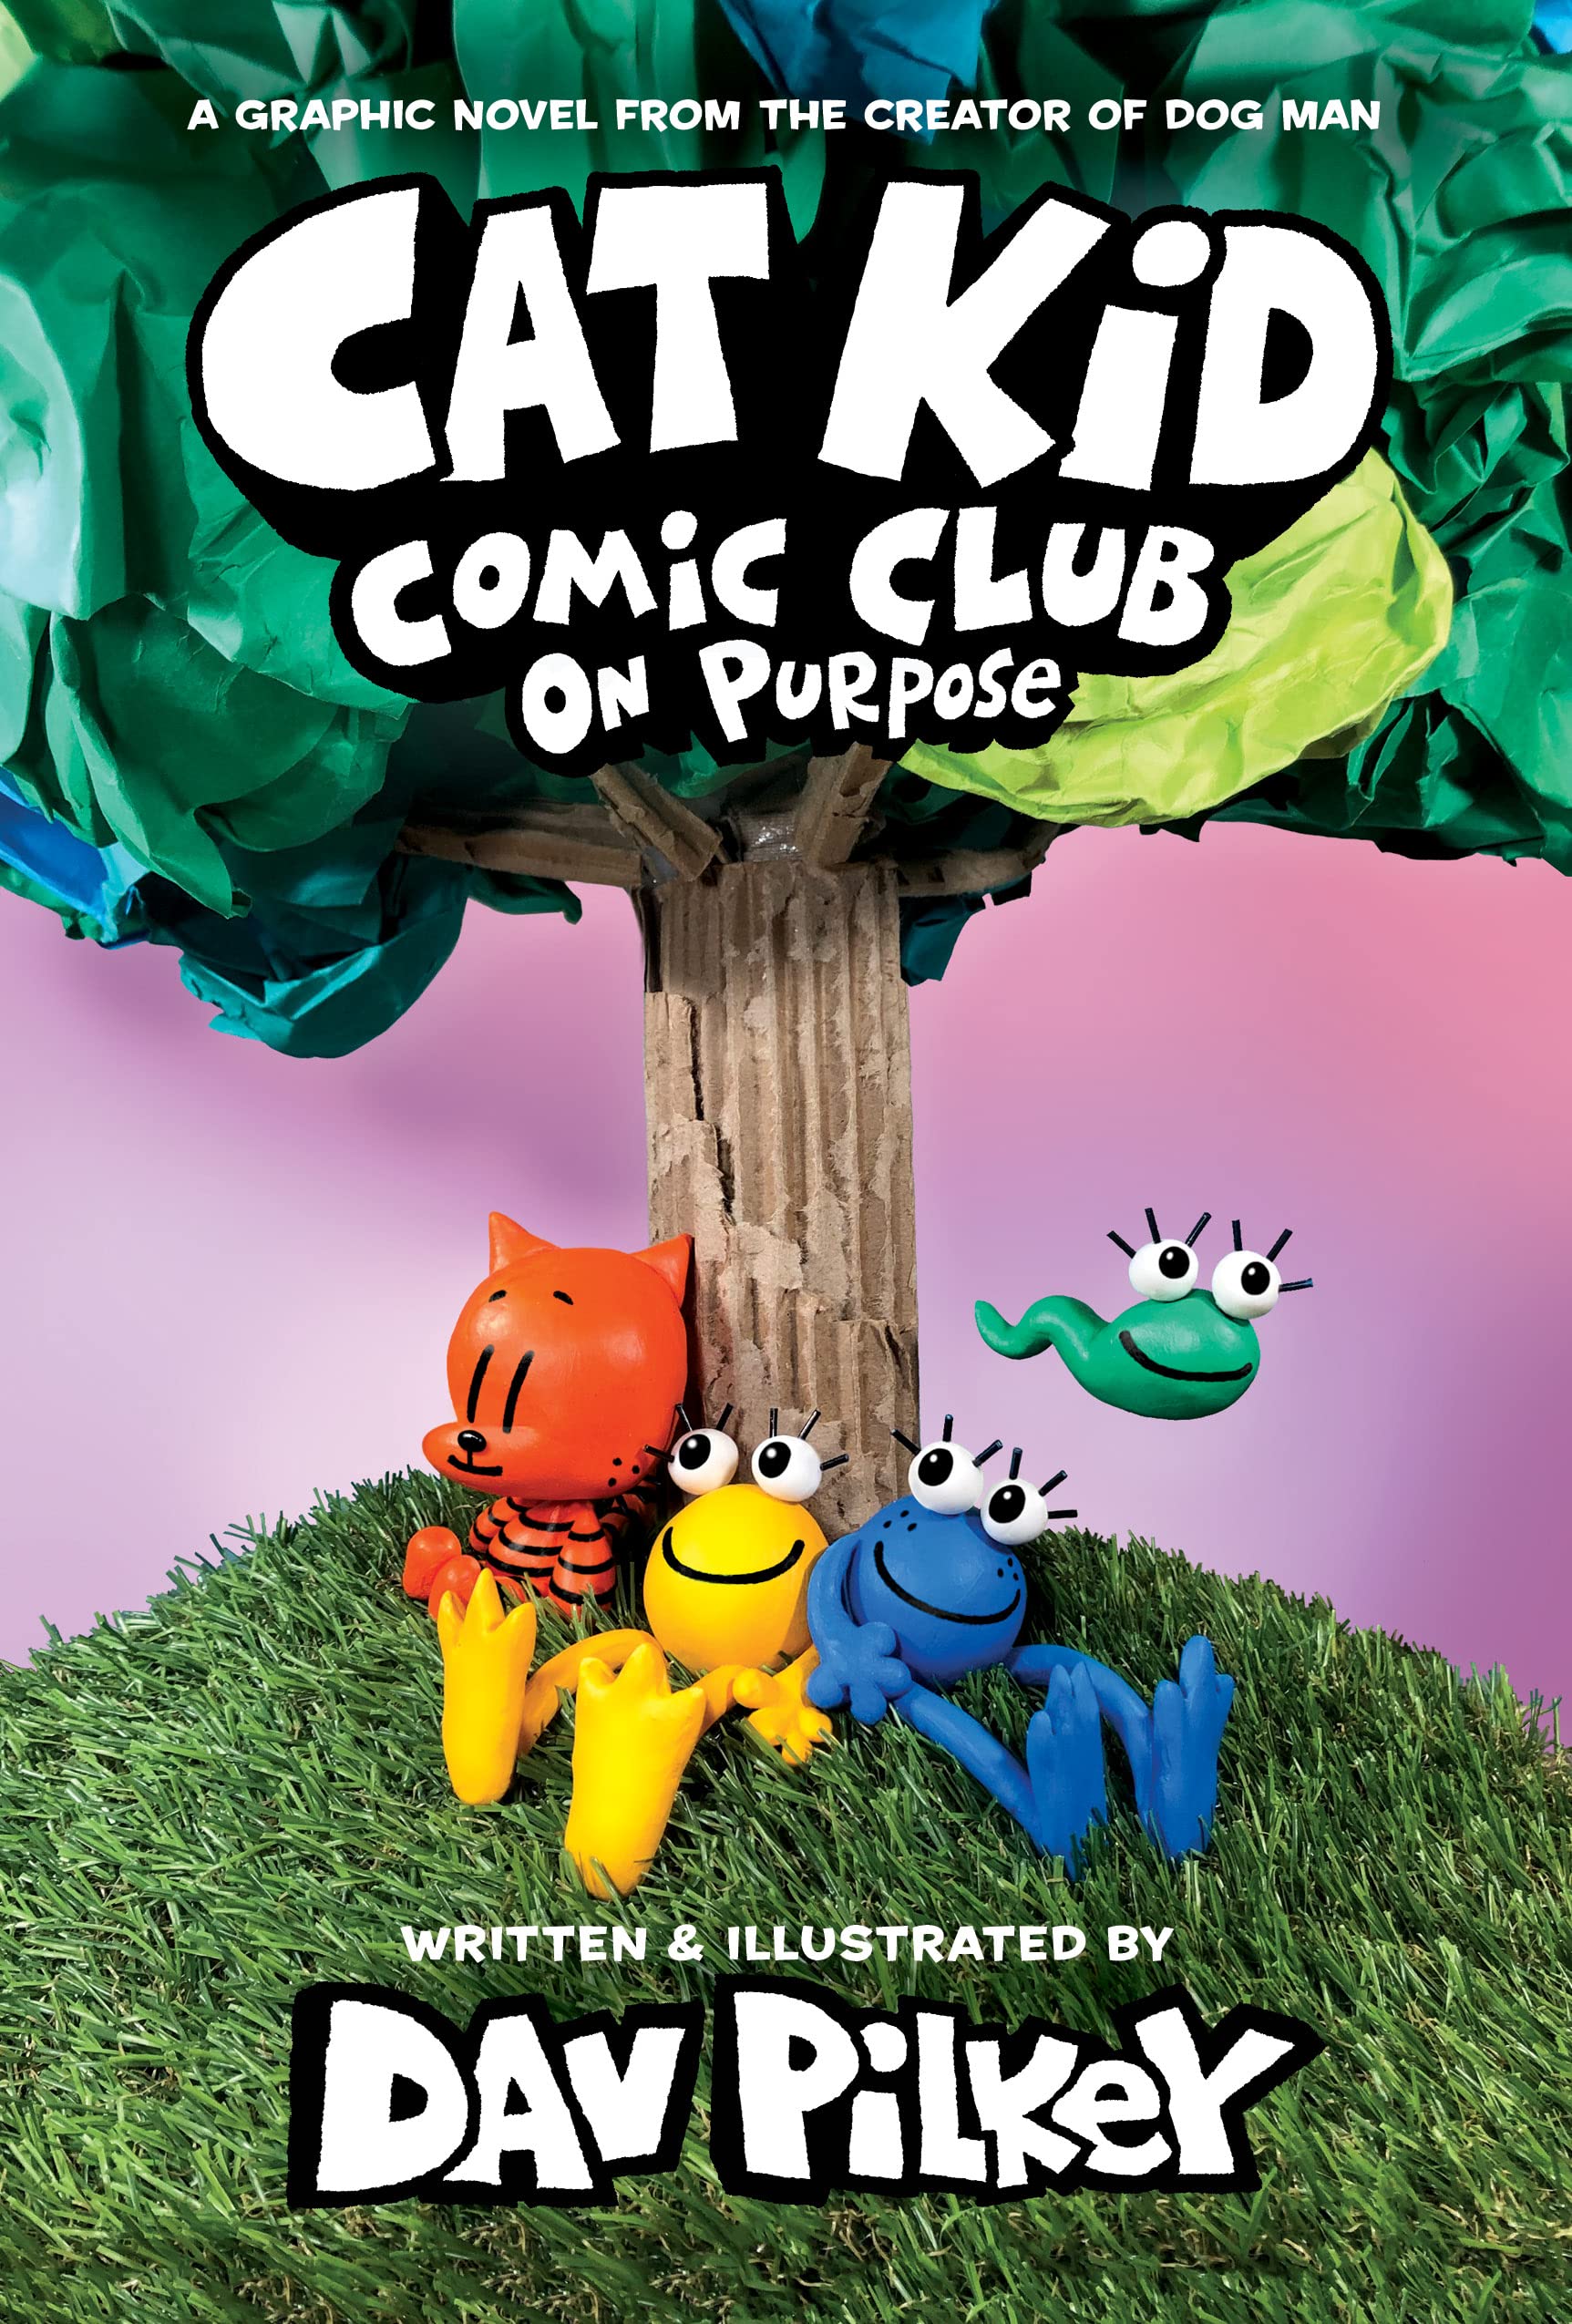 Cat kid comic club. [3] On purpose